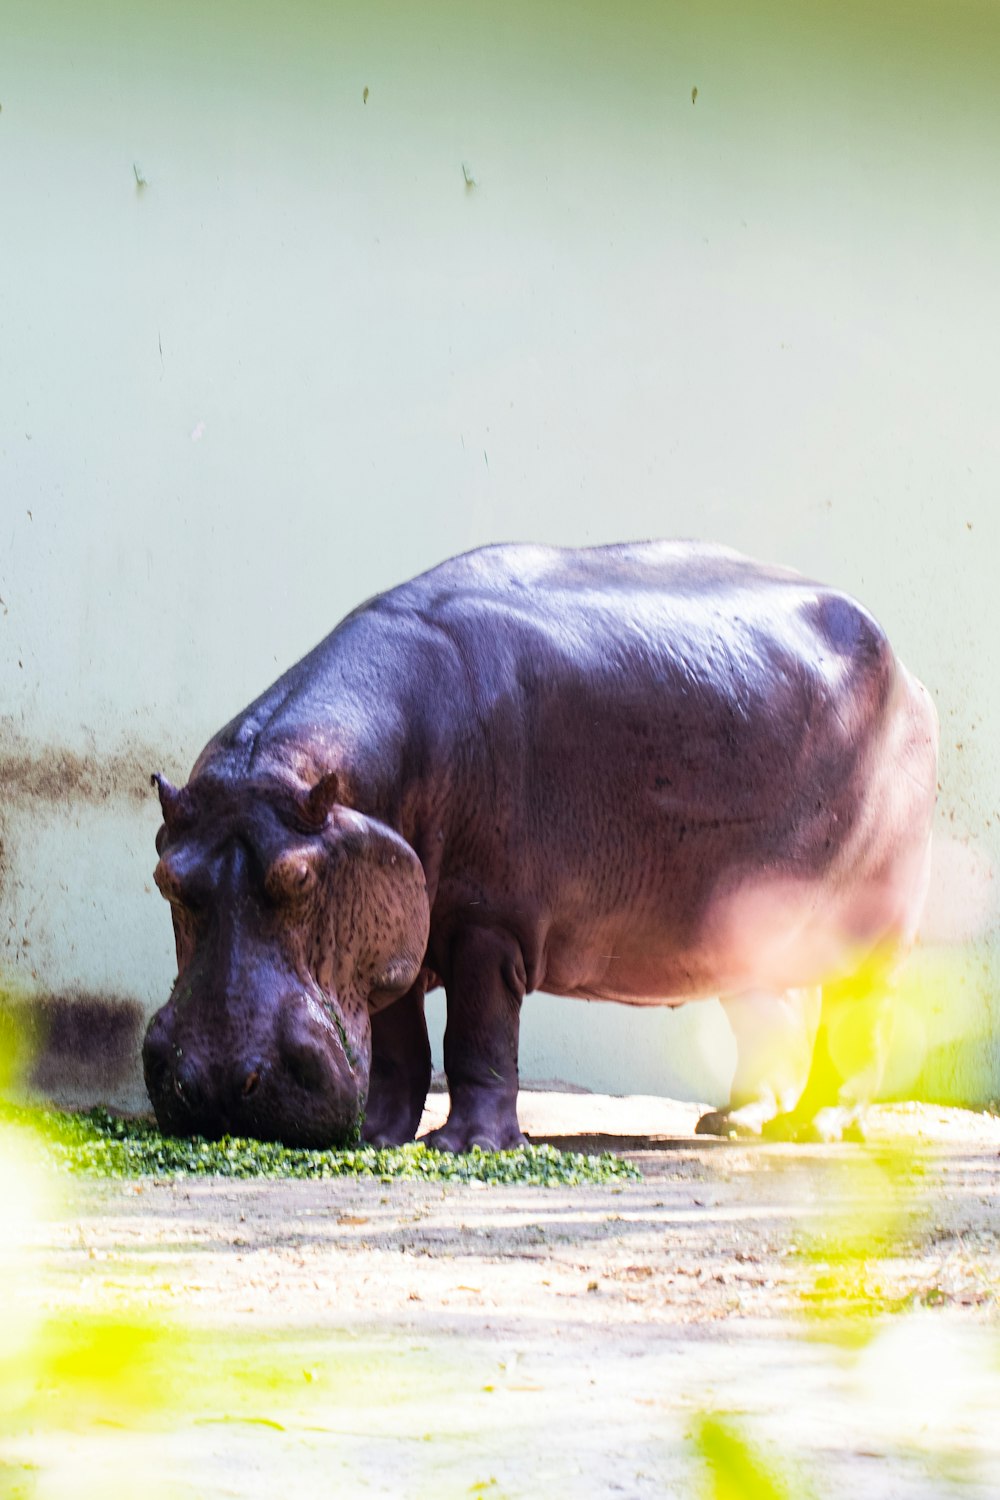 a hippopotamus in a zoo enclosure eating grass